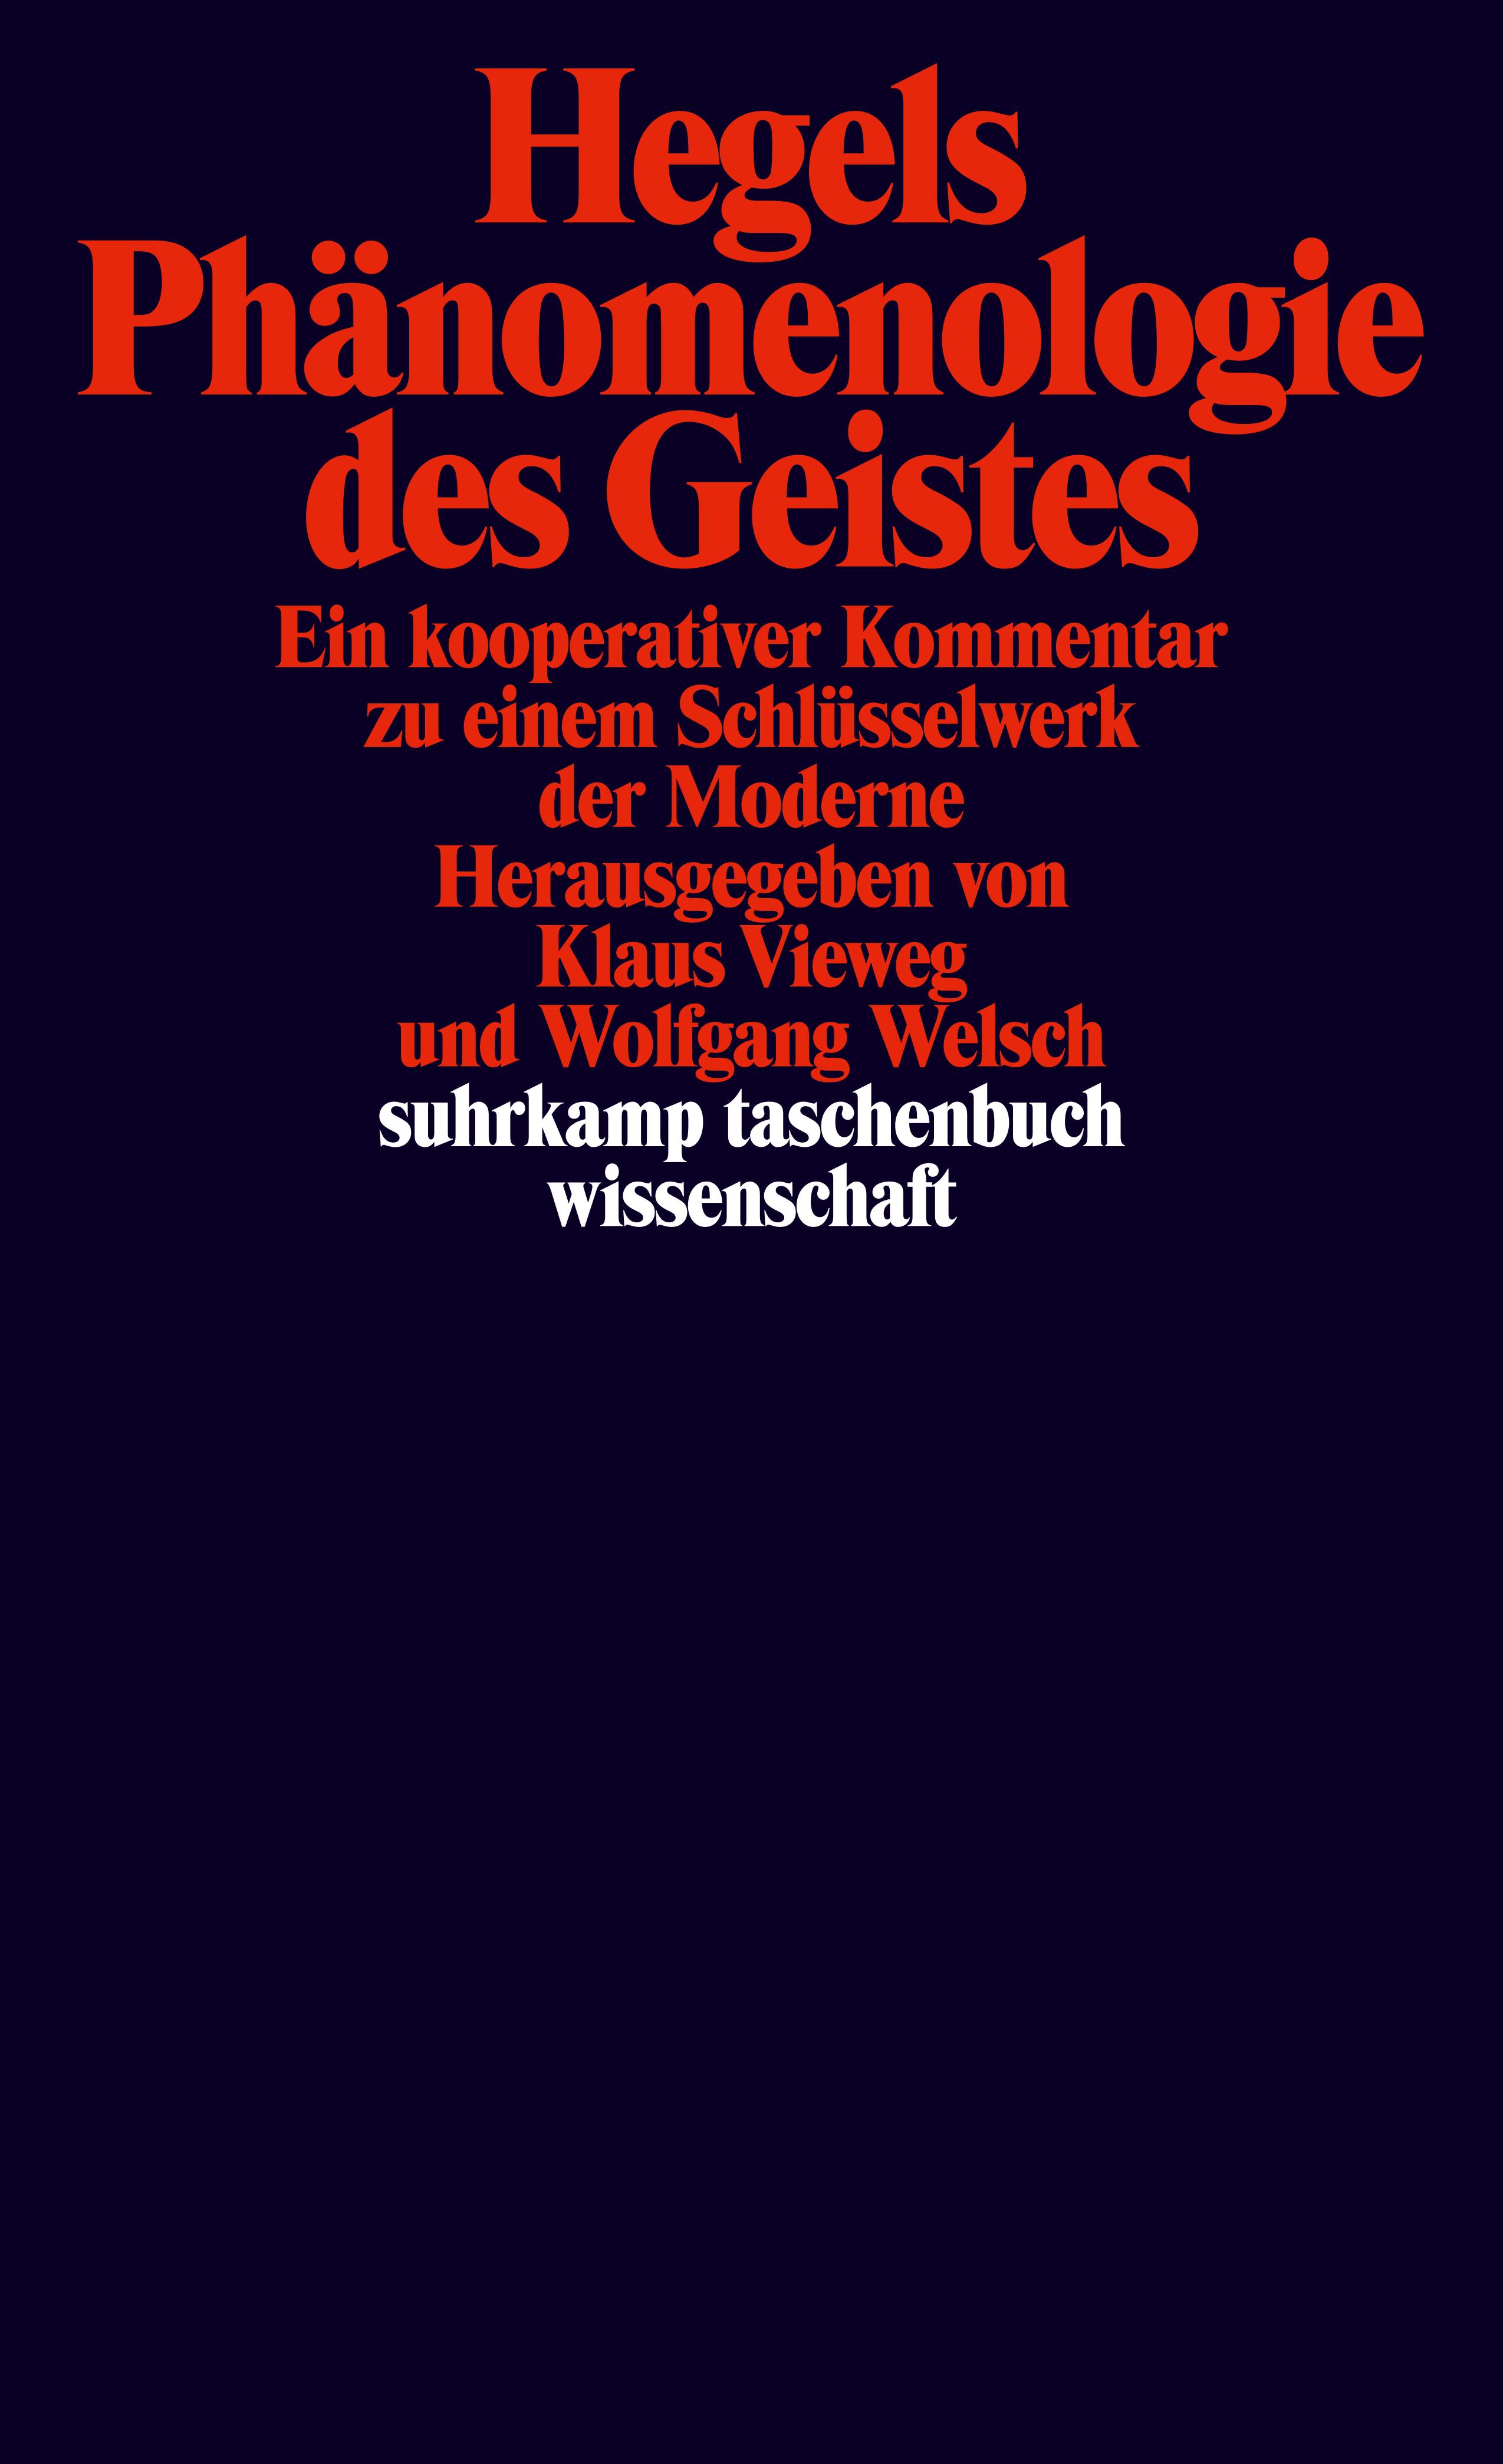 hegels-phaenomenologie-des-geistes_9783518294765_cover.jpg